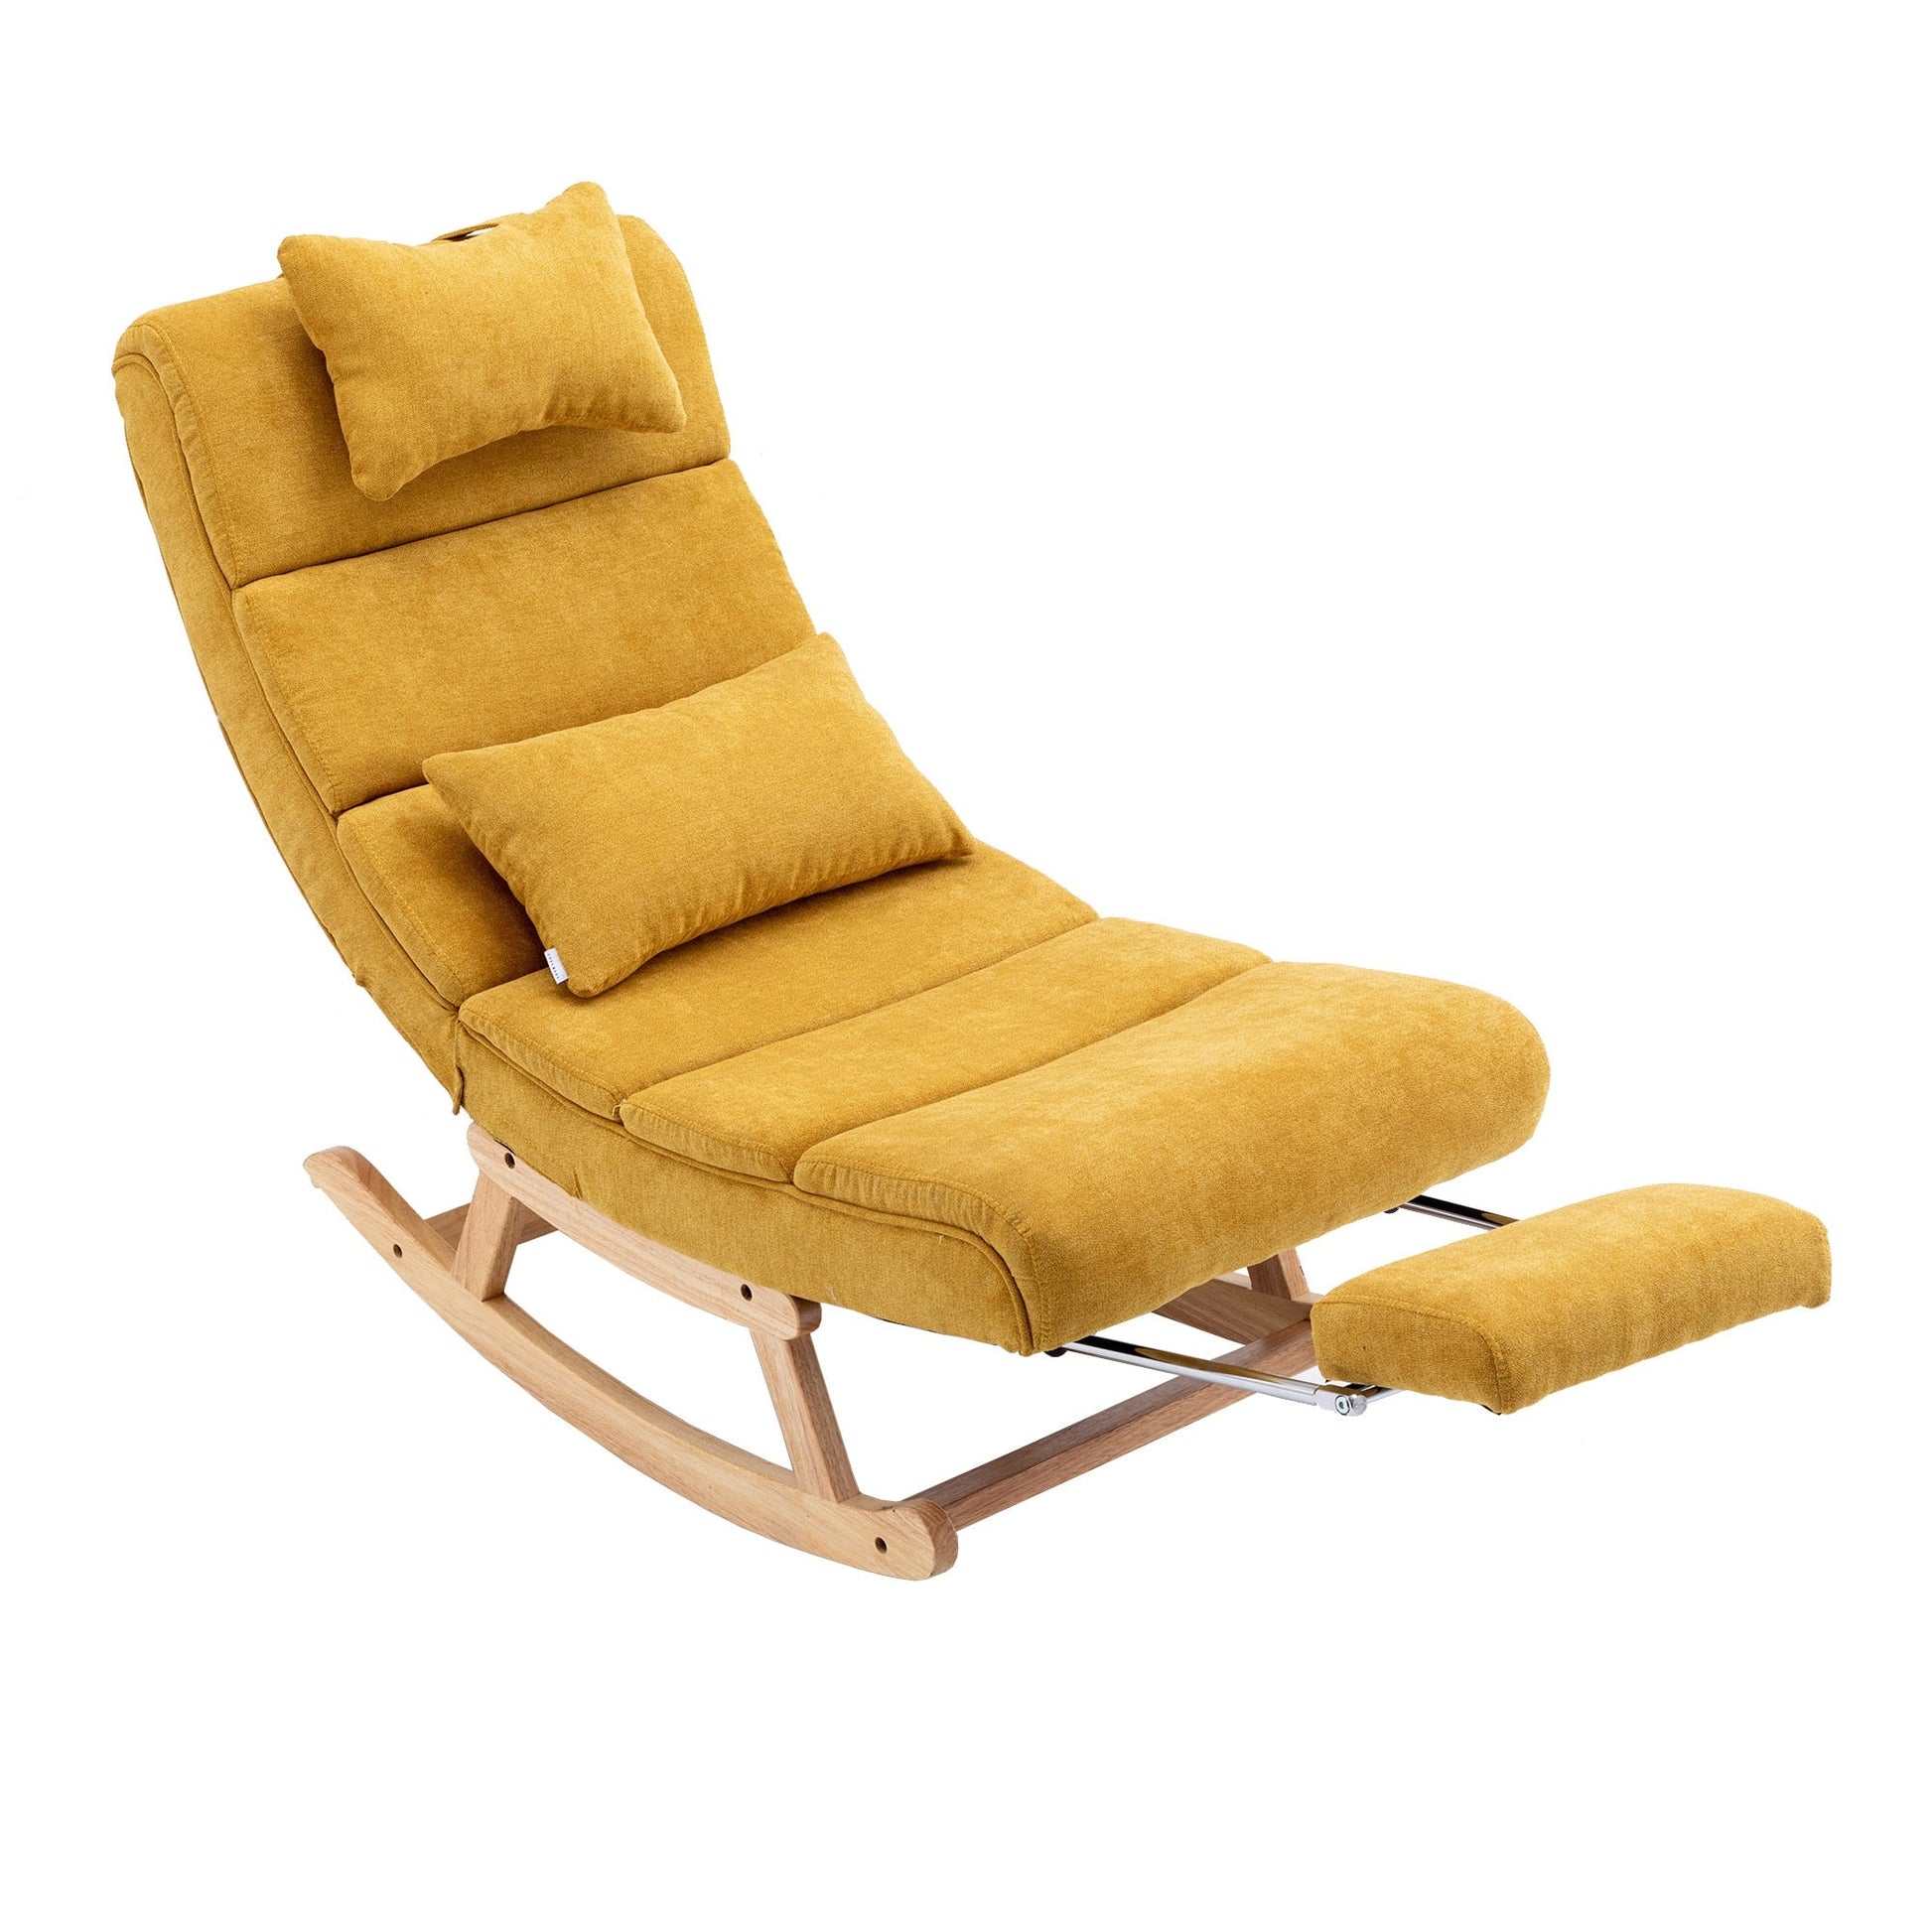 Homio Decor Living Room Yellow / United States Modern Mid-Century Rocking Chair